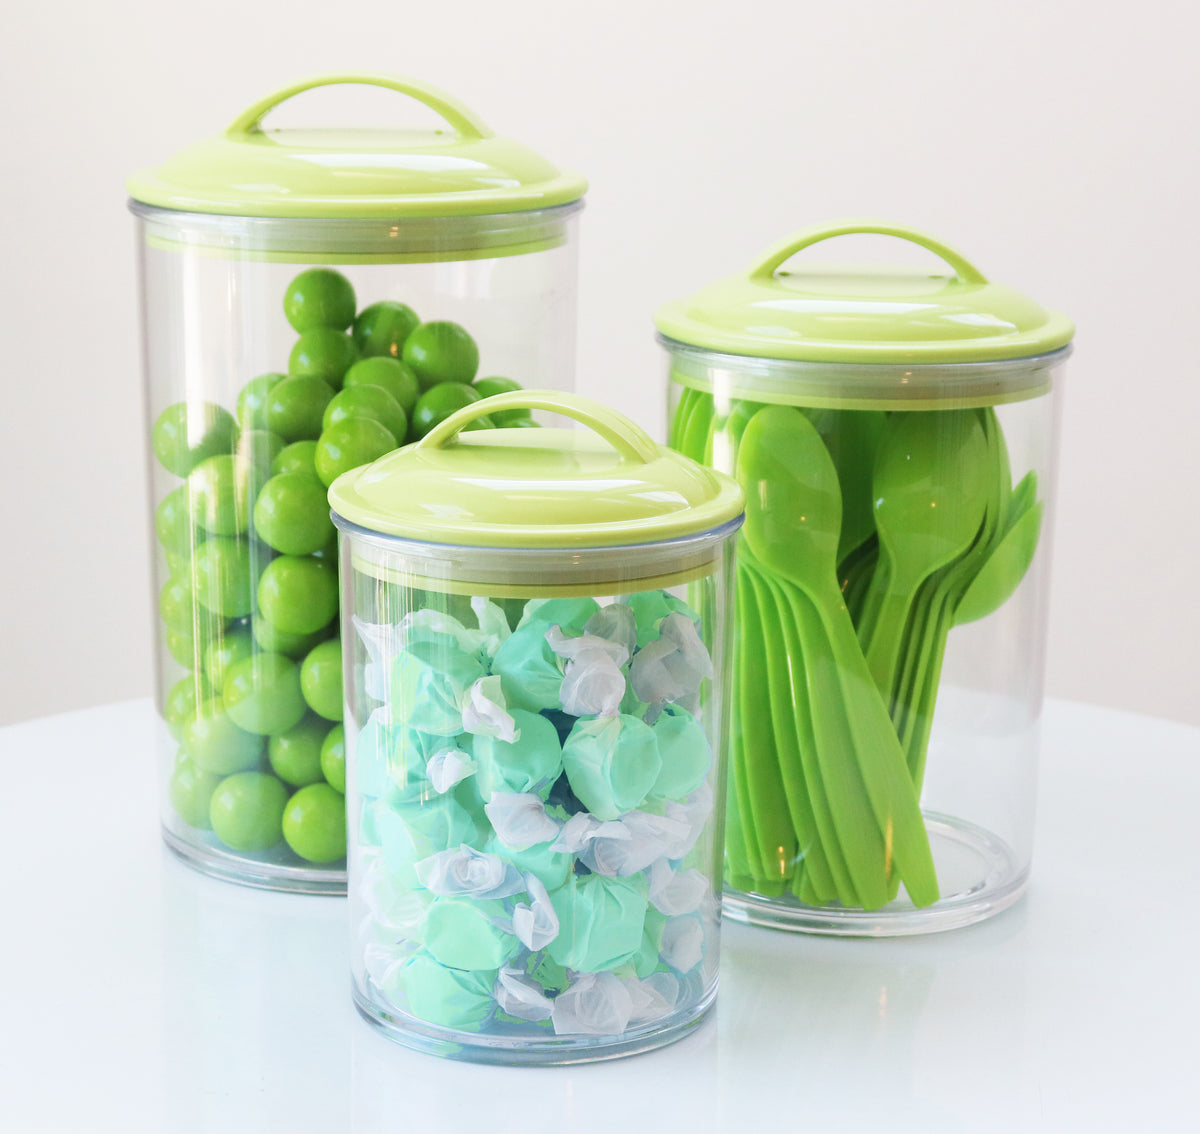 Acrylic Apothecary Jars (3-Piece Set), Plastic Jars with Lids